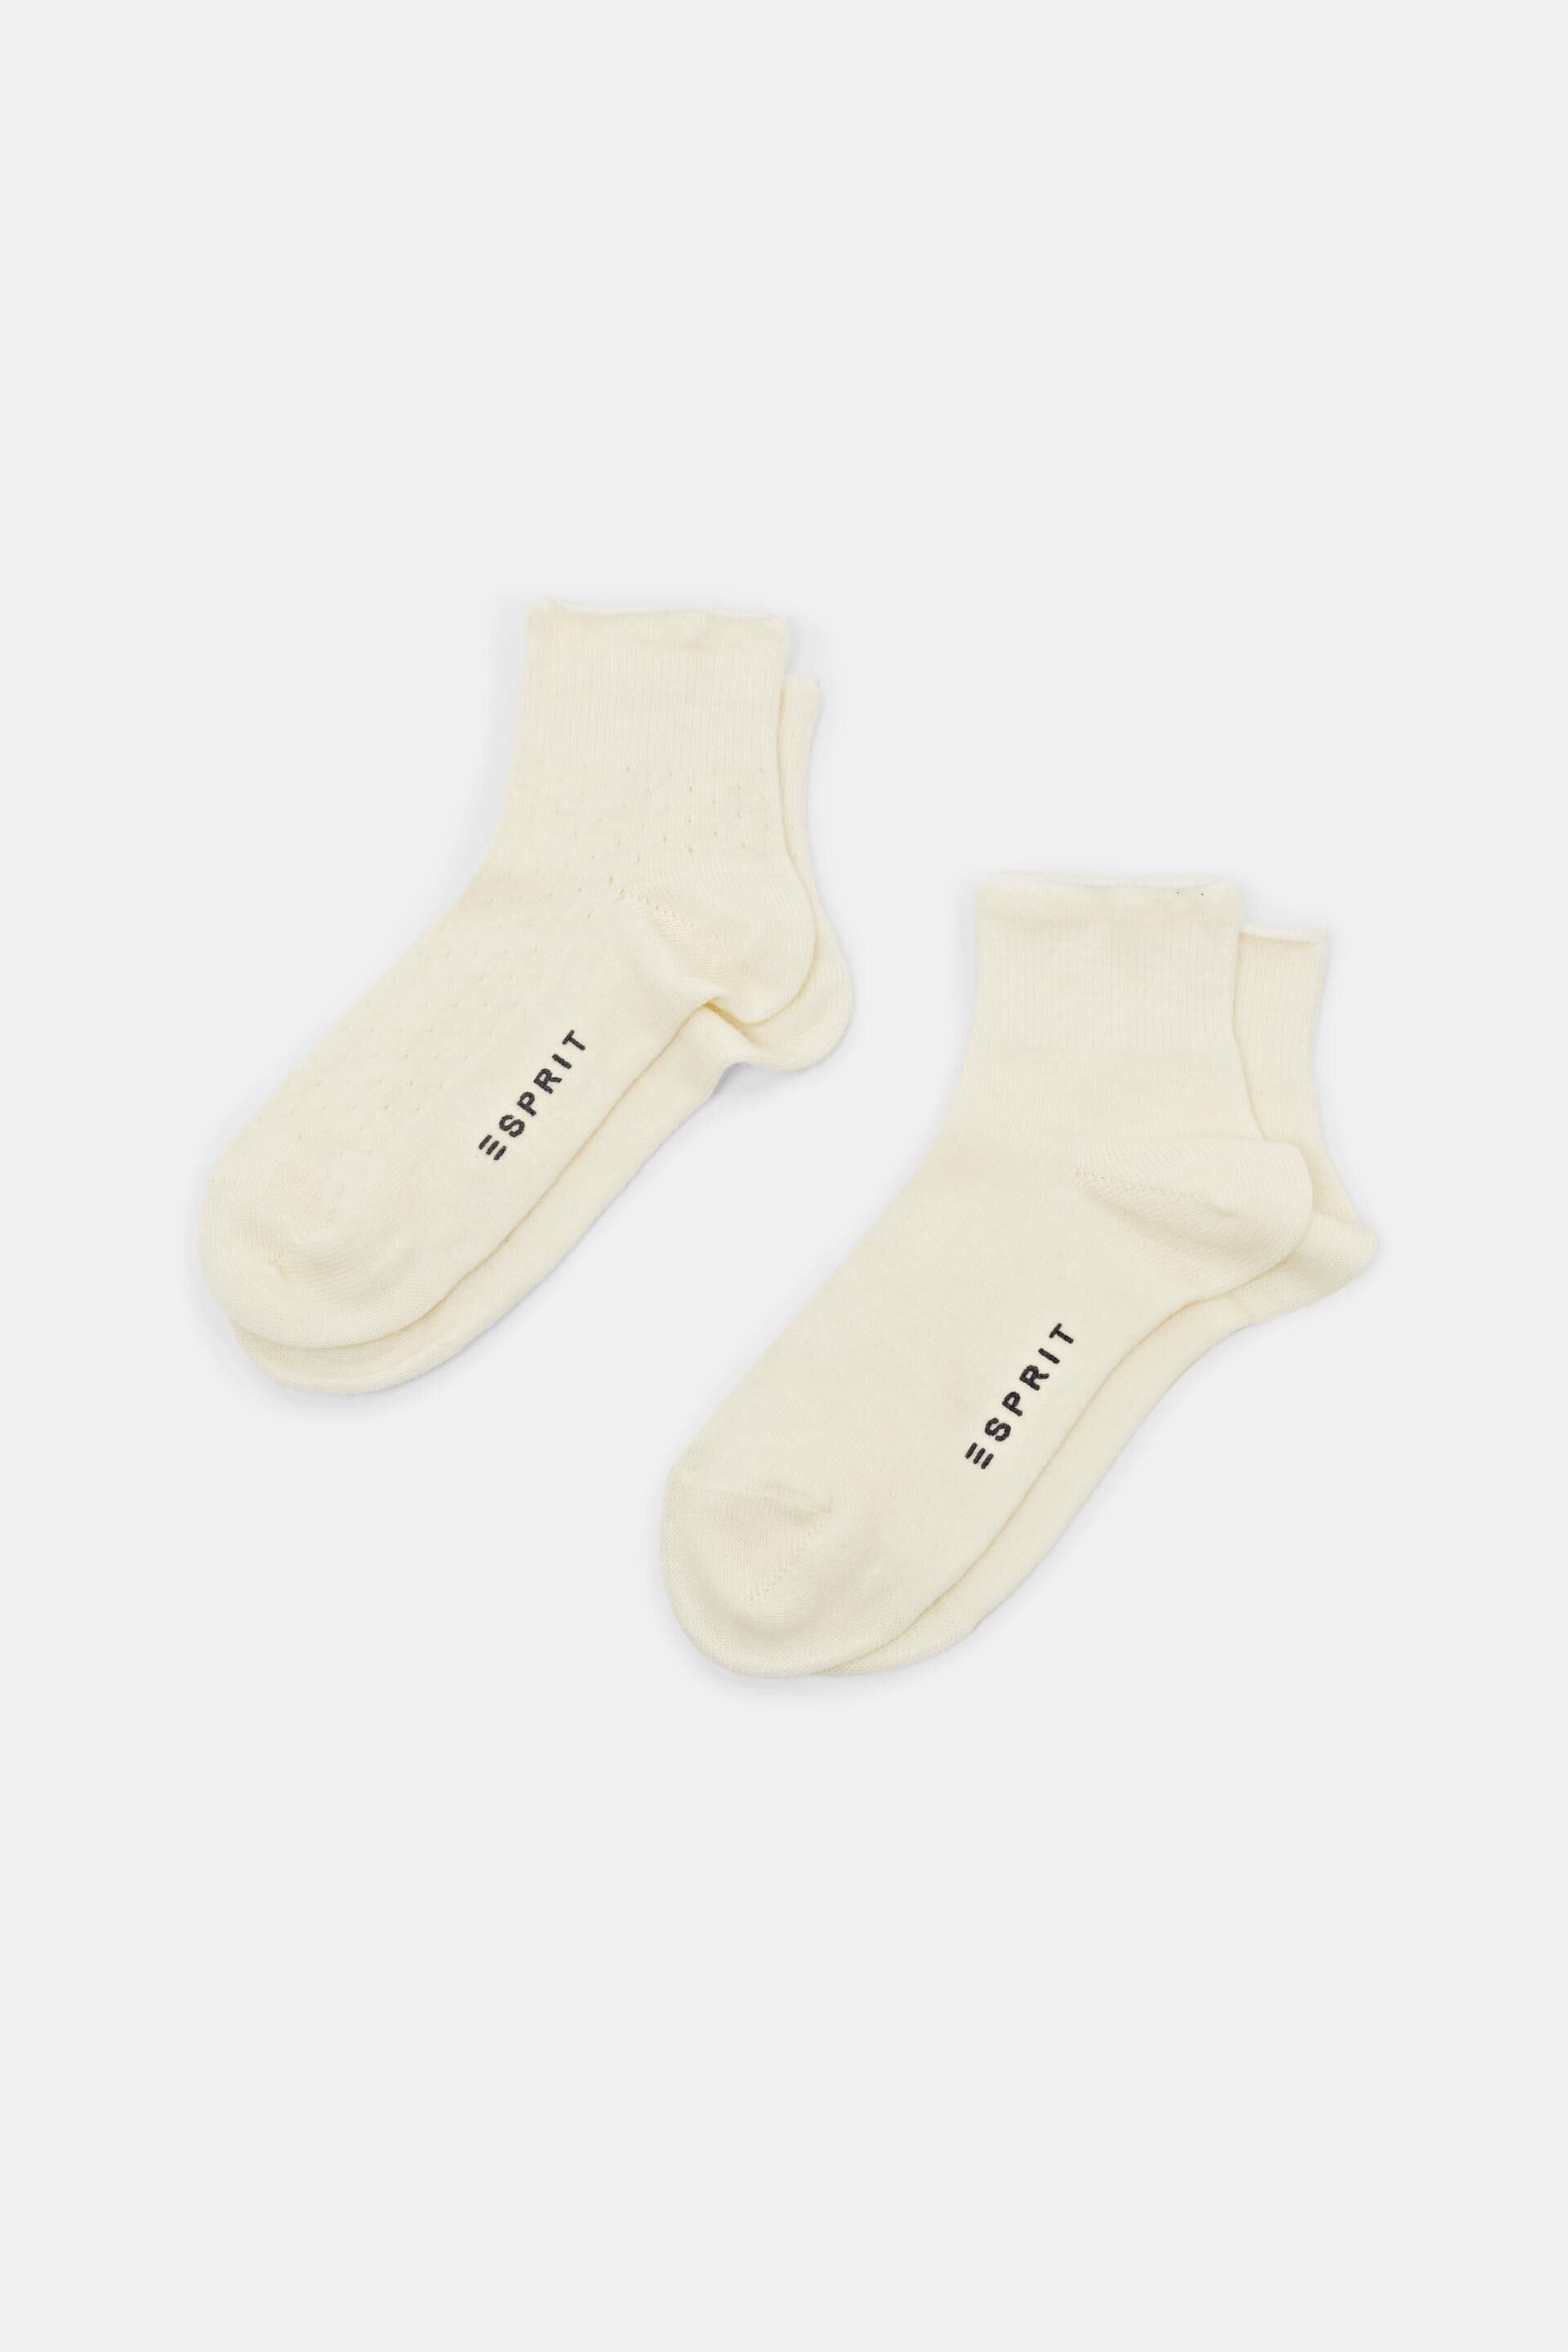 Esprit Online Store 2-pack of lace pattern socks, wool blend